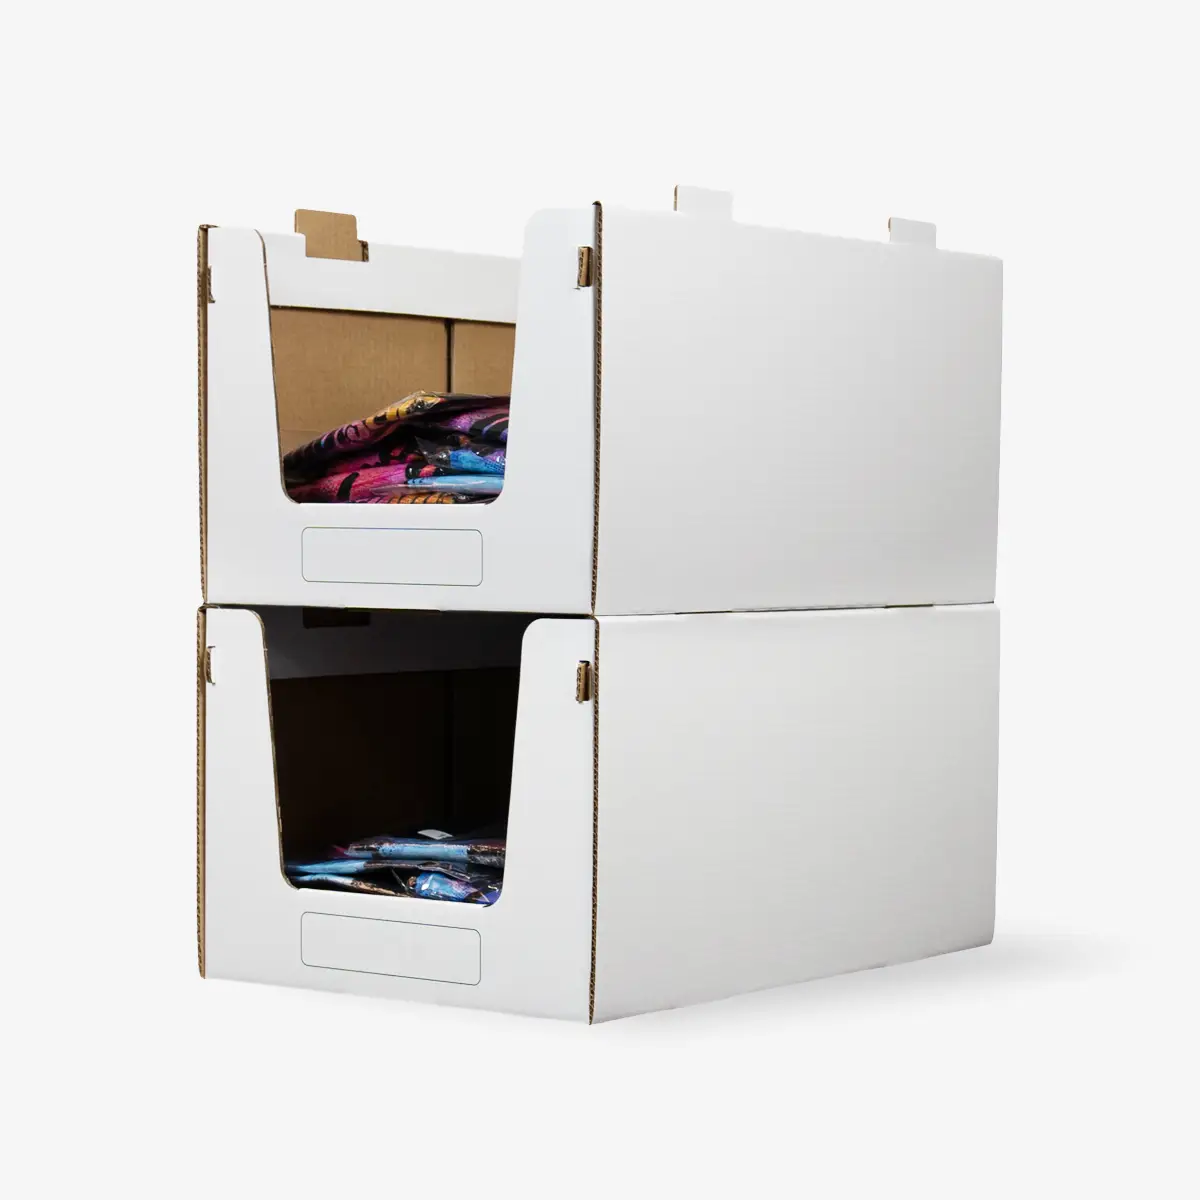 lagerkarton.de lagerkarton gross pickbox large productimage produktbild seitenansicht sideview sichtlagerkasten lagerbox stapelbox 01